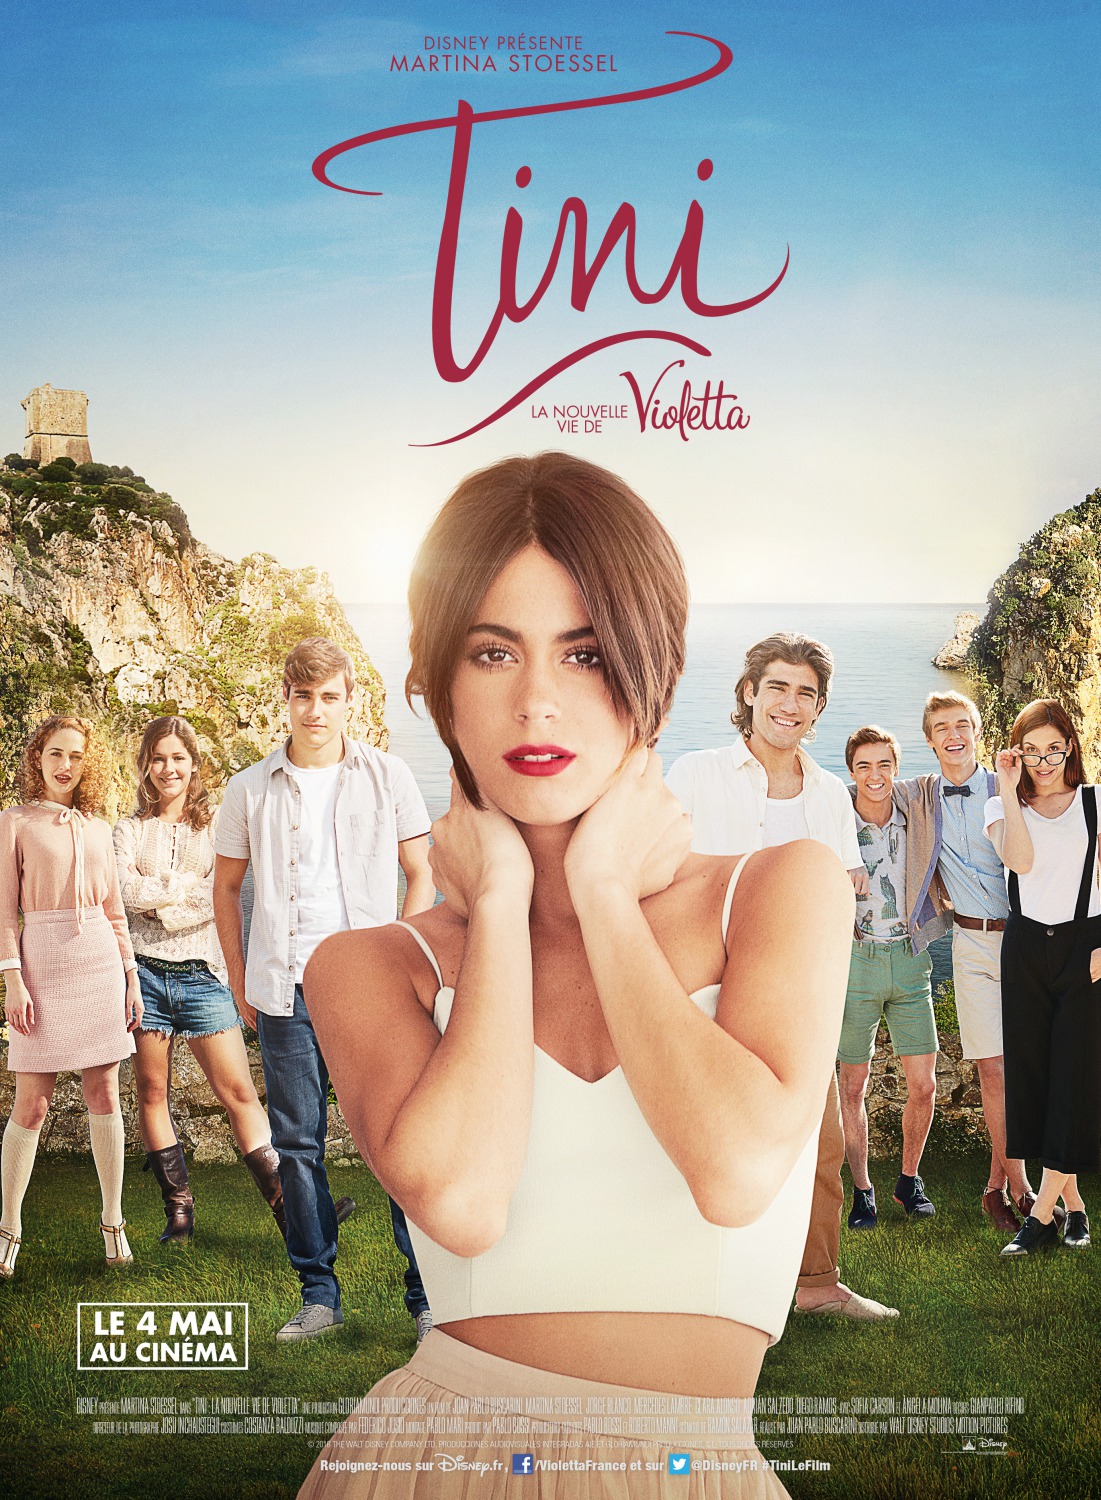 Extra Large Movie Poster Image for Tini: El gran cambio de Violetta (#11 of 12)